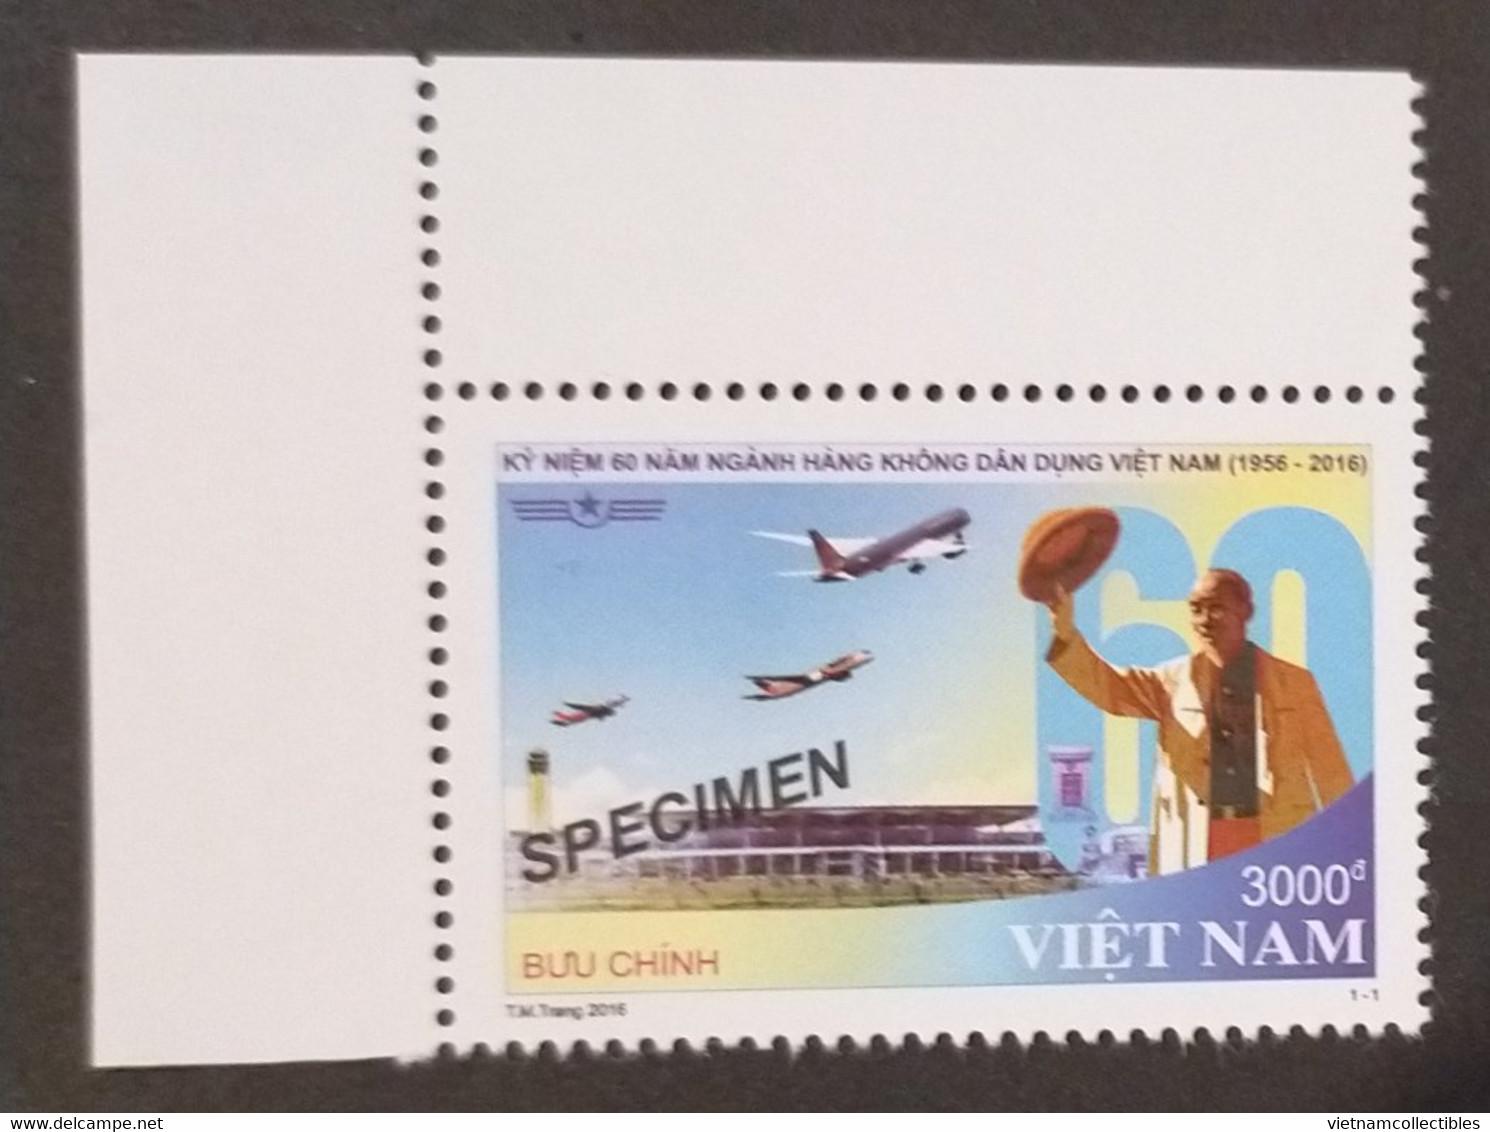 Vietnam MNH SPECIMEN Stamp 2016 : 60th Anniversary Of Air Viet Nam / Airplane (Ms1063) - Vietnam